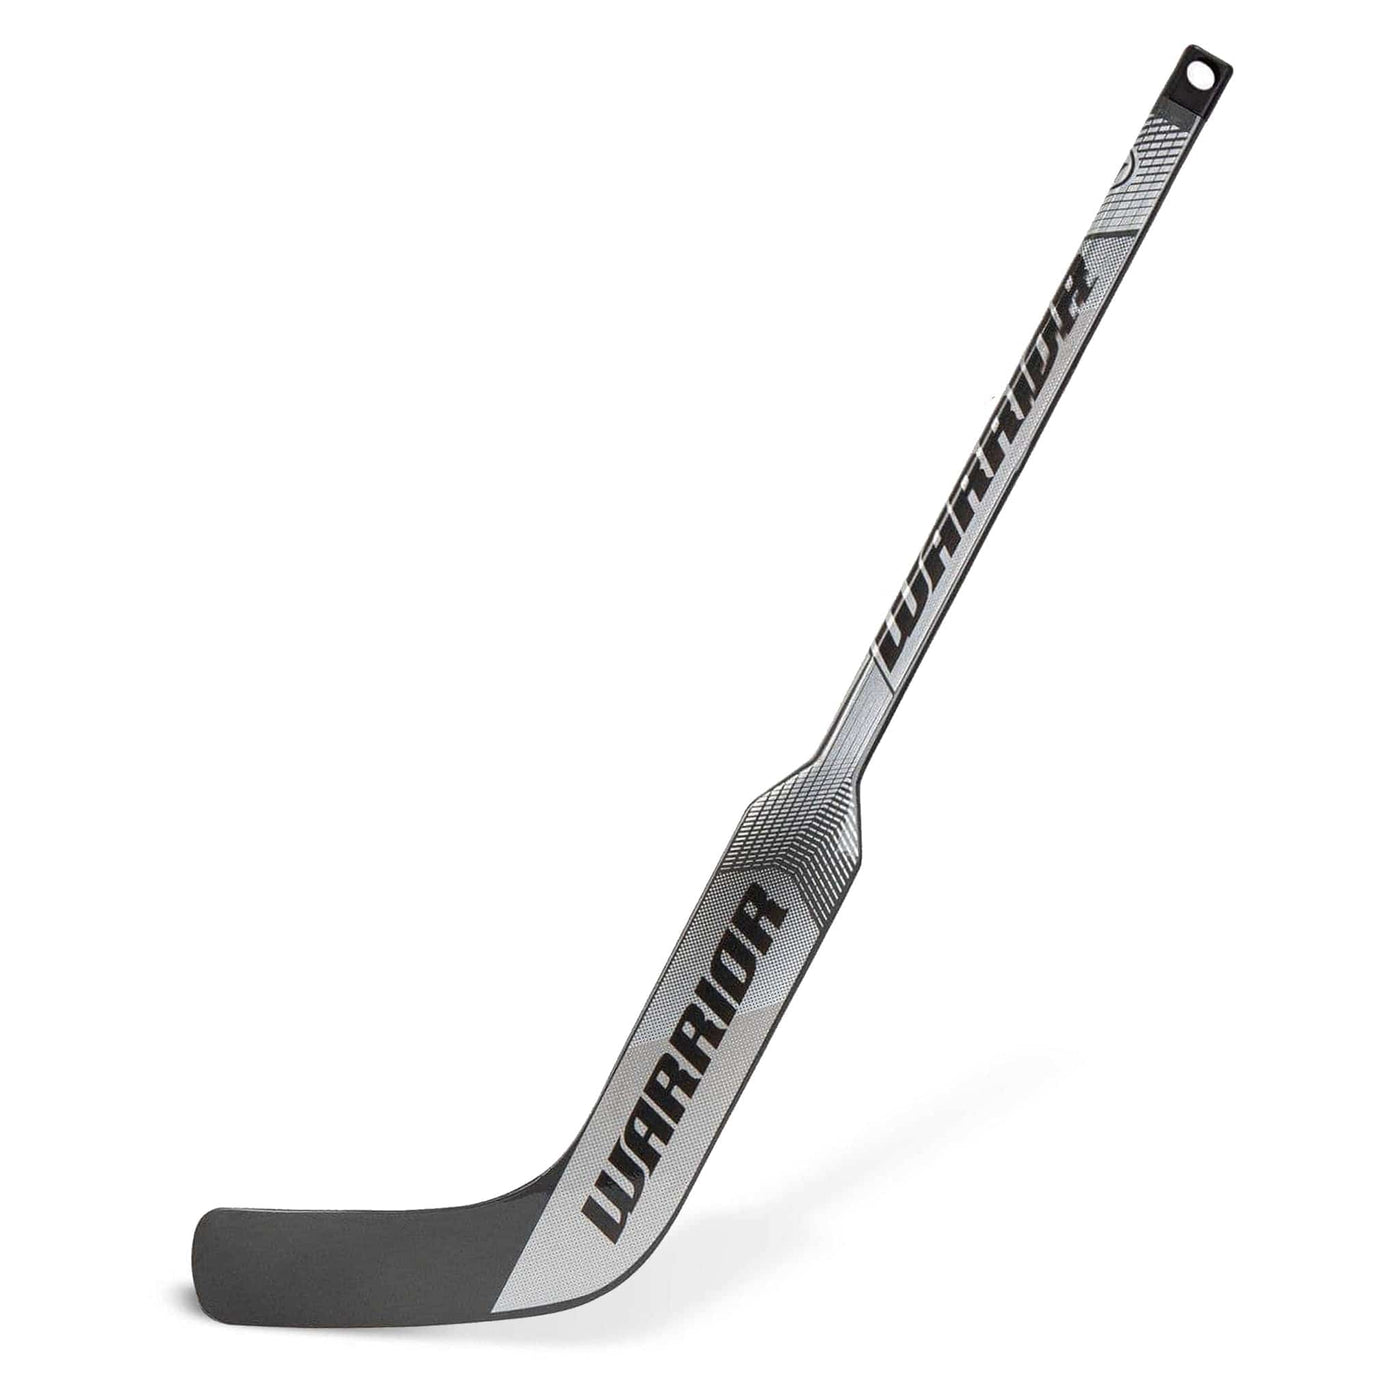 Warrior Ritual V2 Pro Composite Mini Goalie Stick - The Hockey Shop Source For Sports